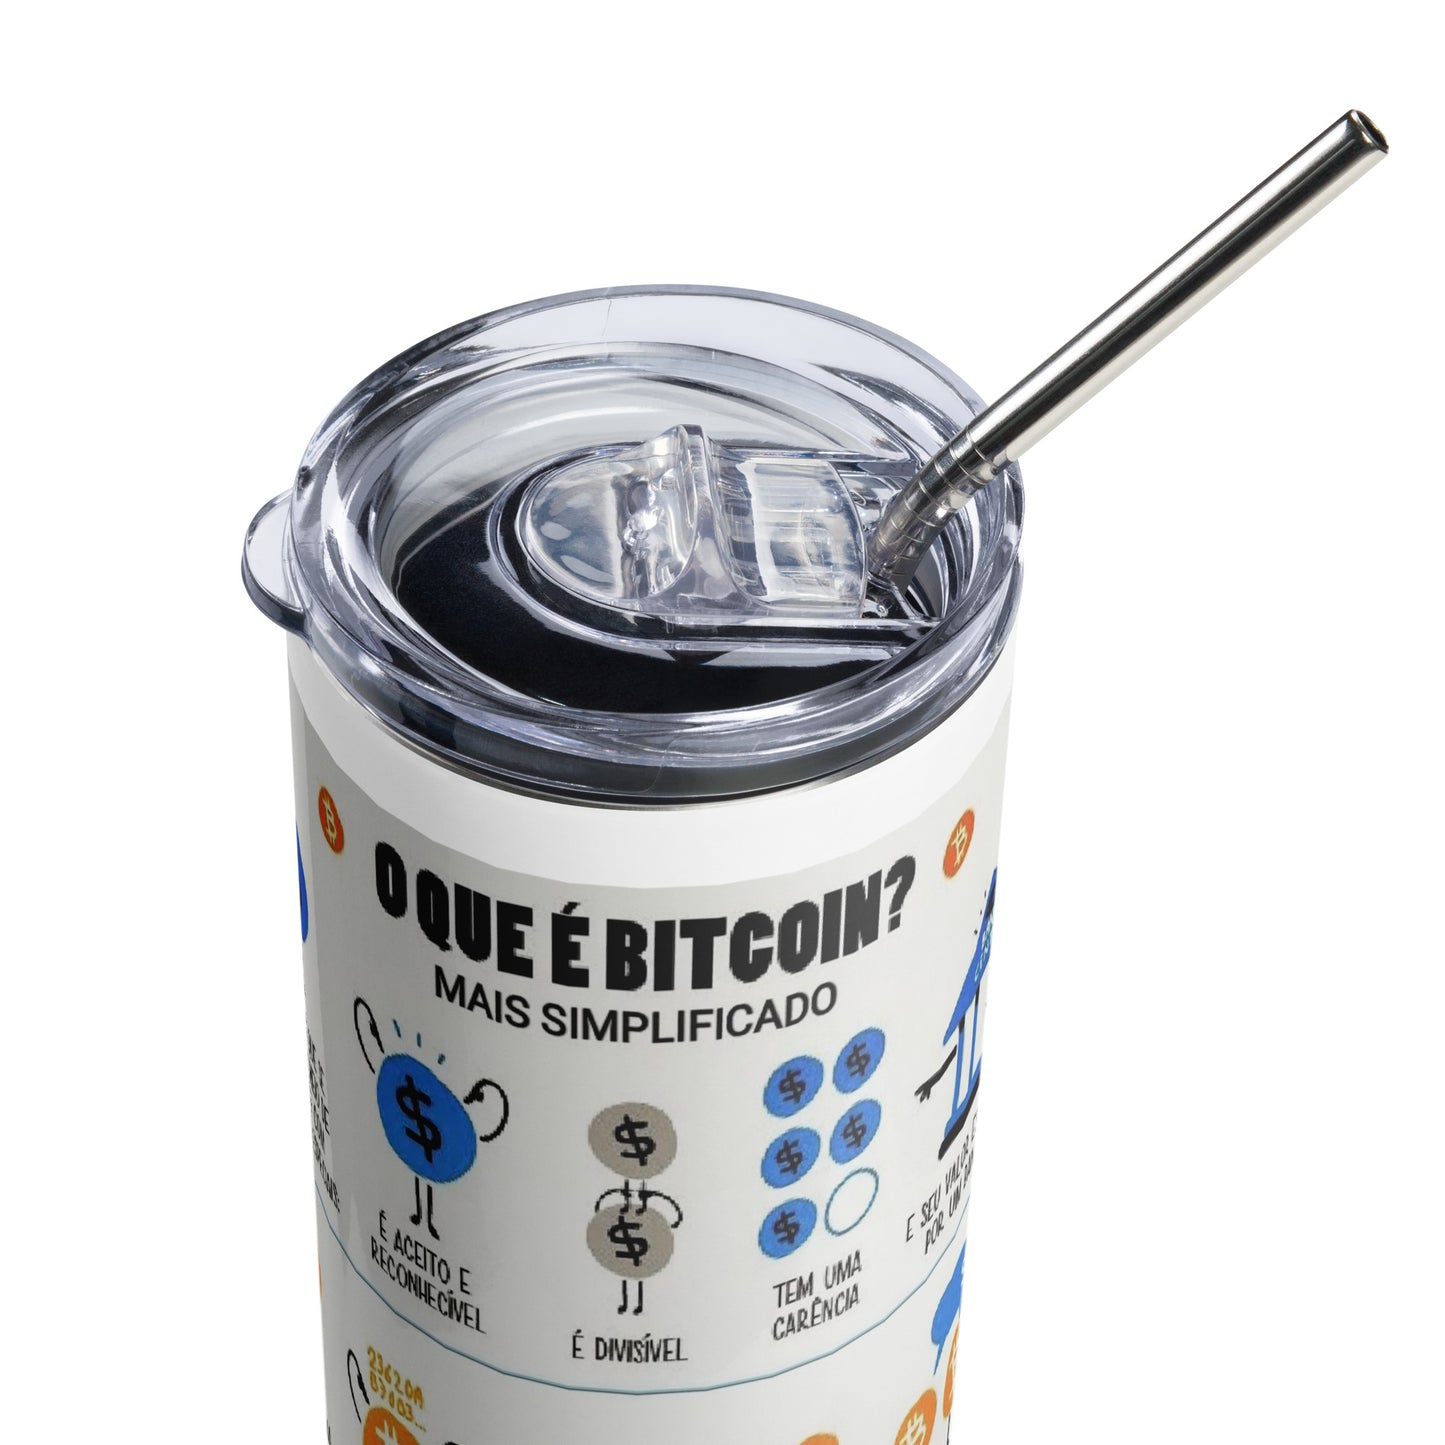 Bitcoin progresscripto stainless steel cup